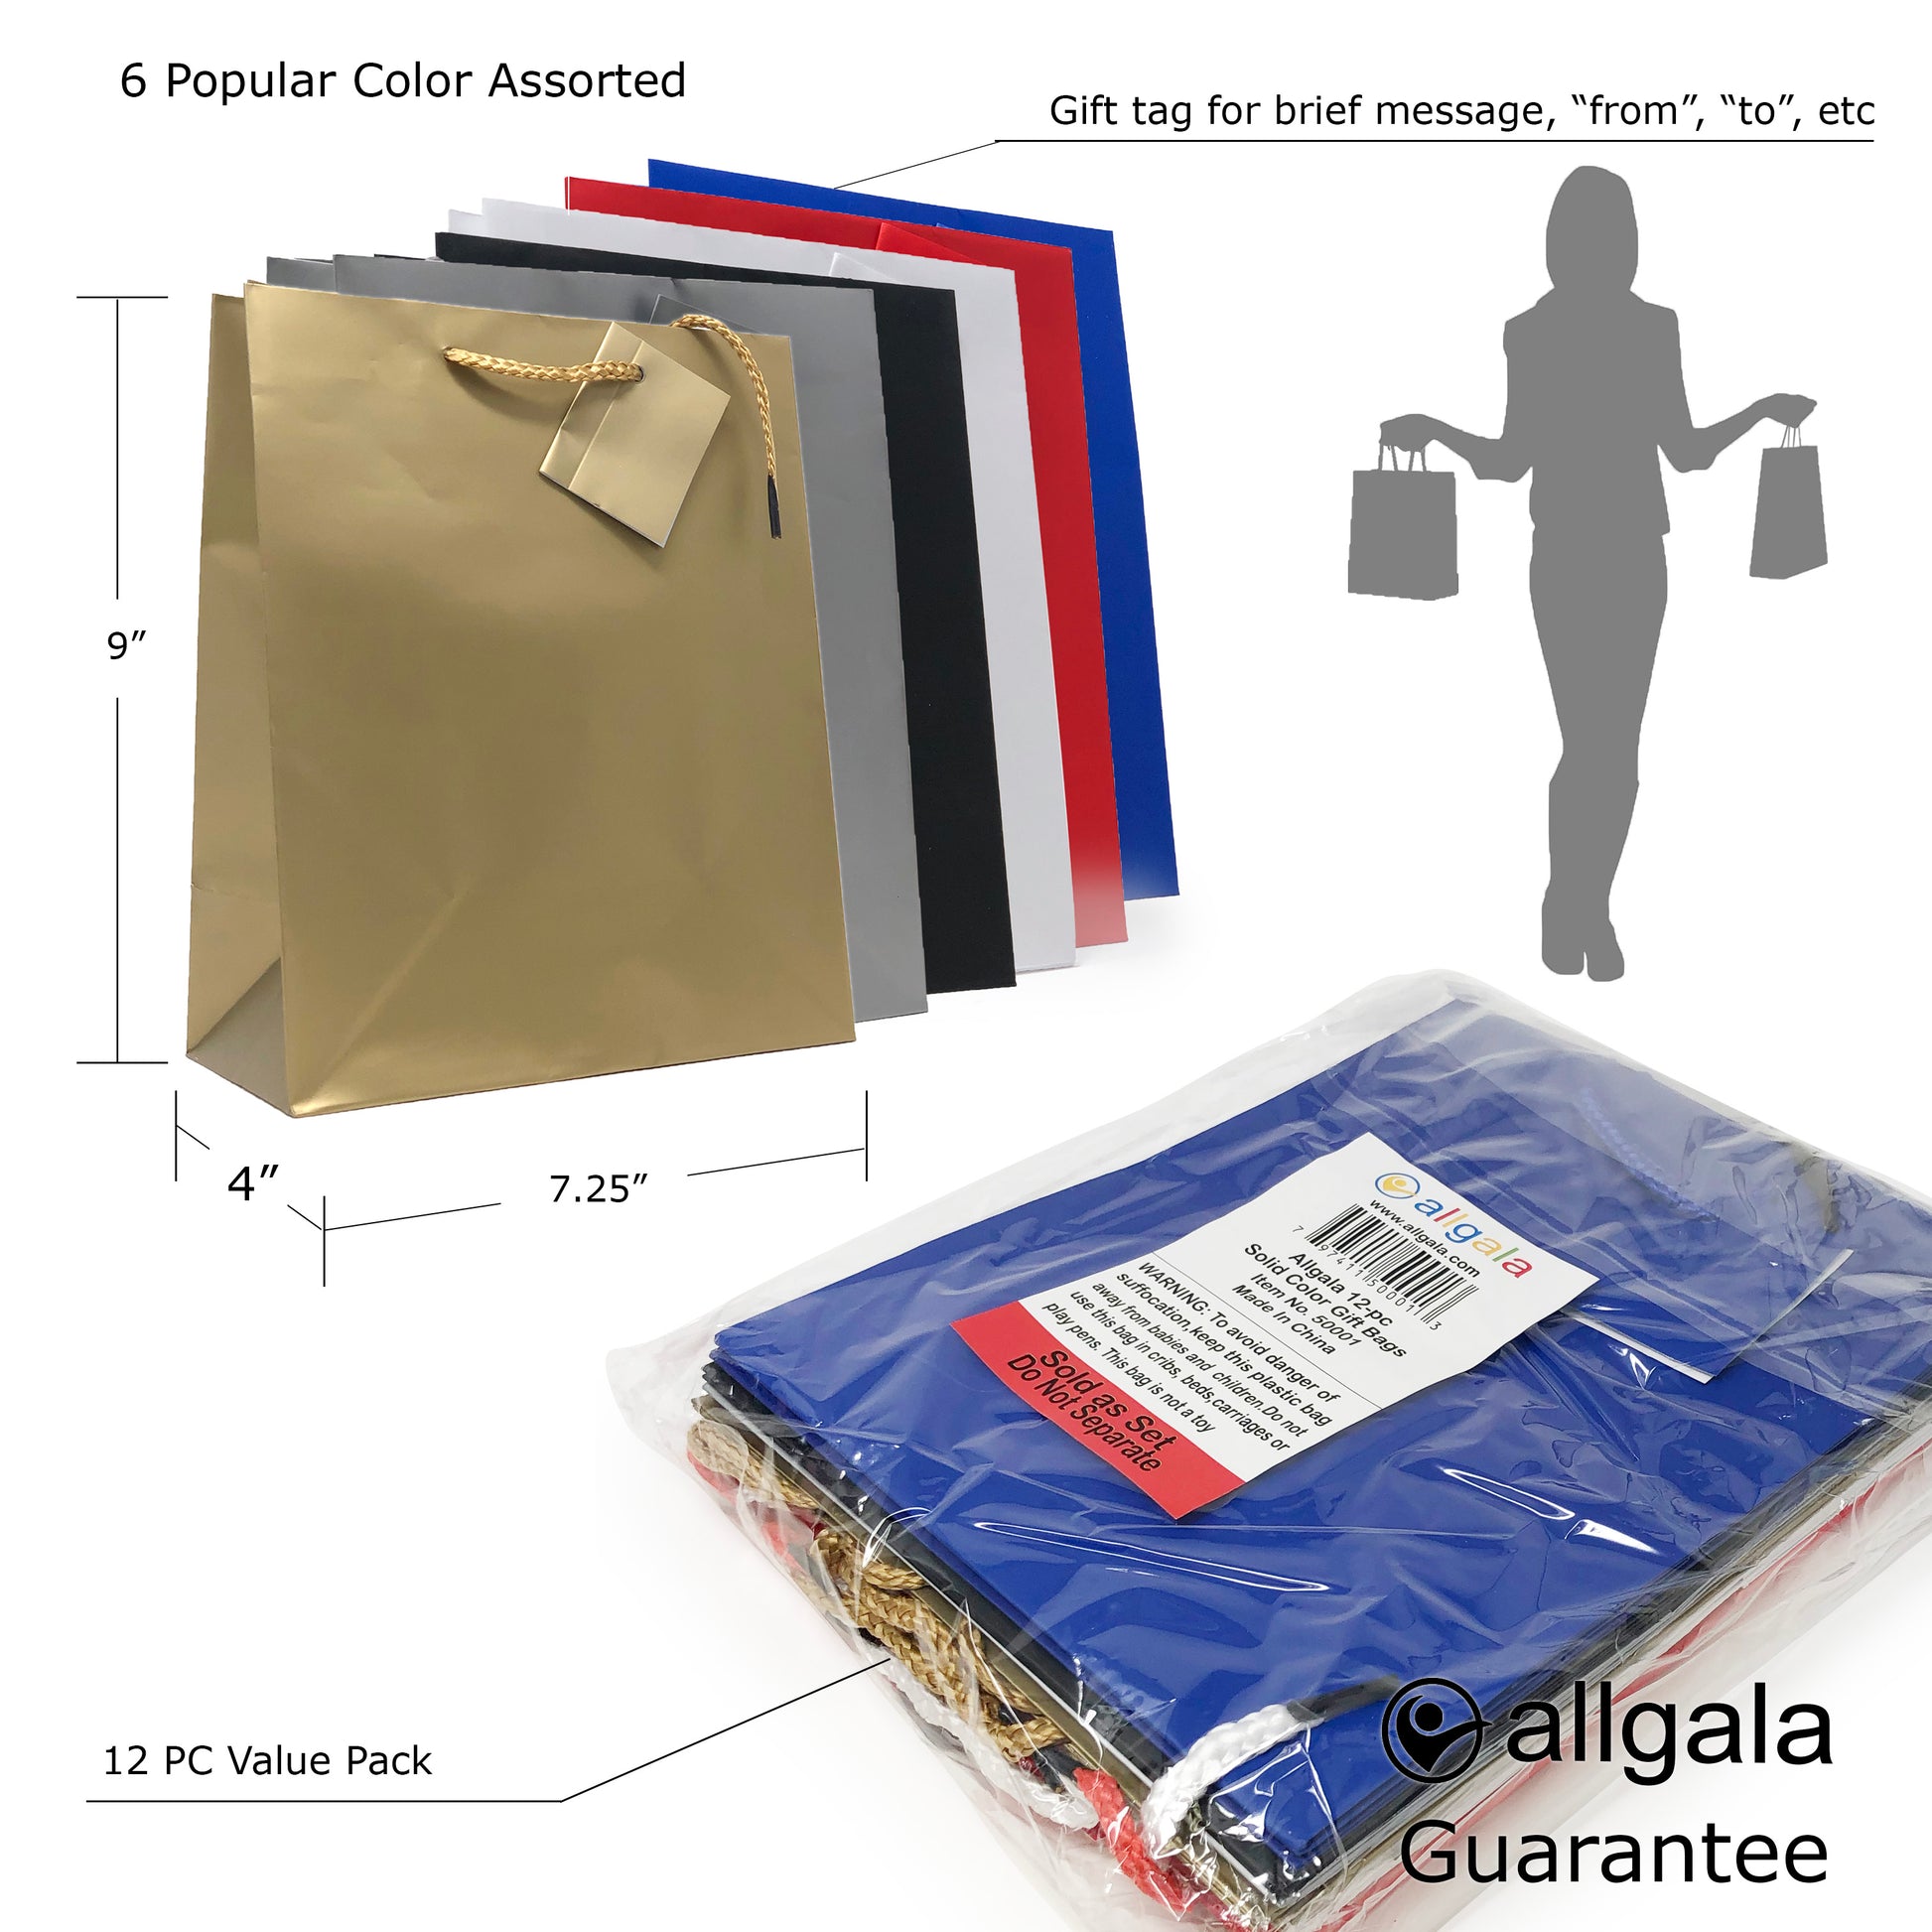 Color Paper Bags